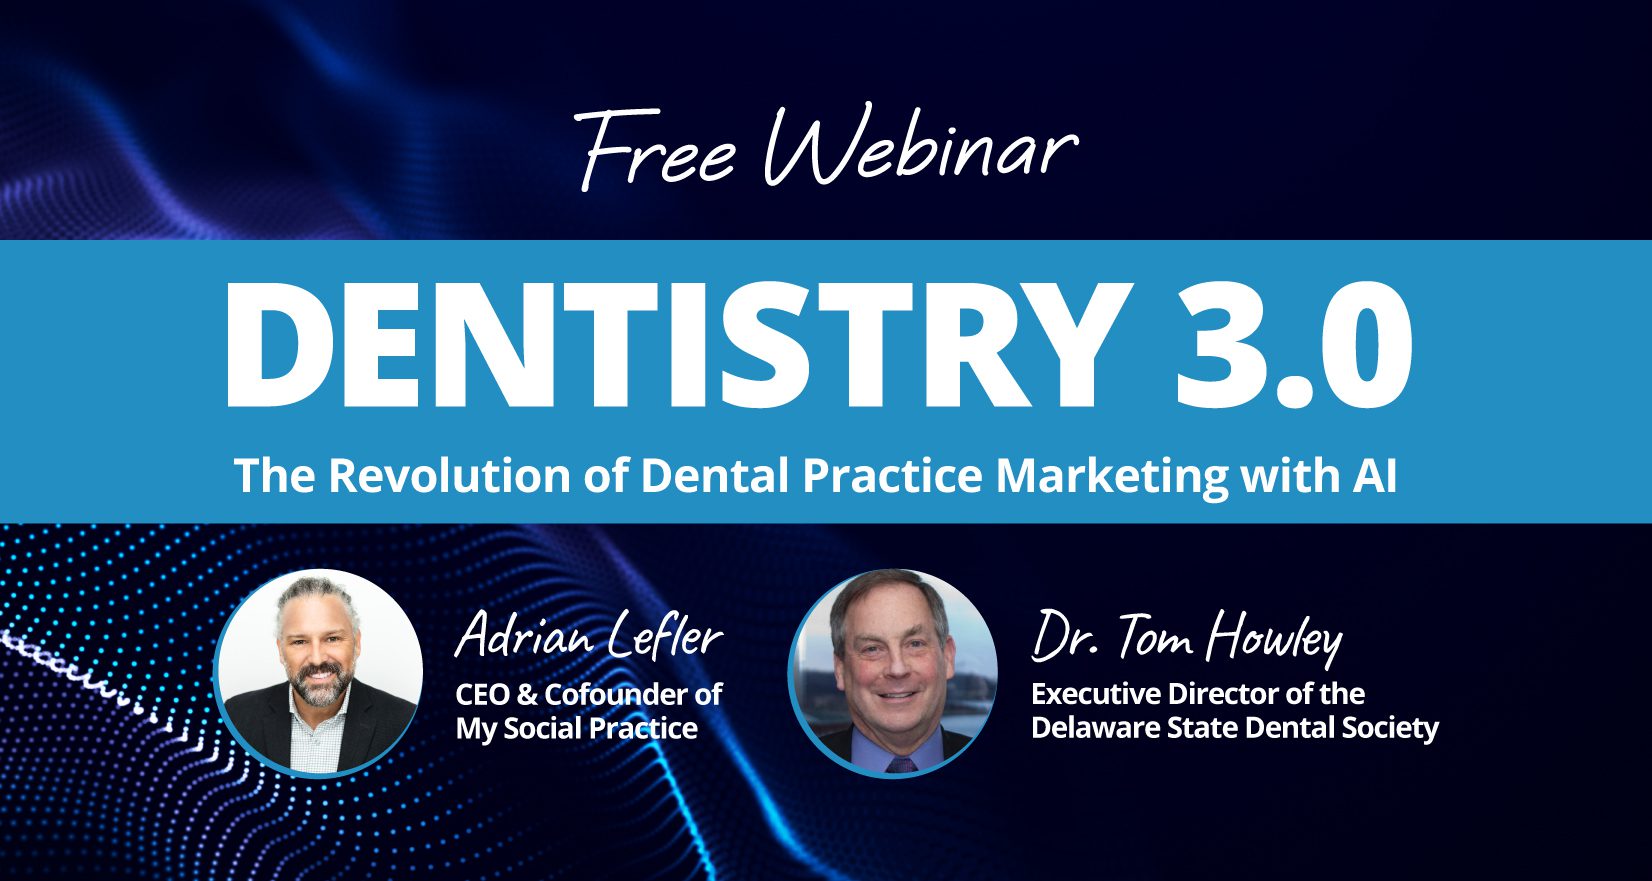 My Social Practice - Social Media Marketing for Dental & Dental Specialty Practices - dental marketing for dso's